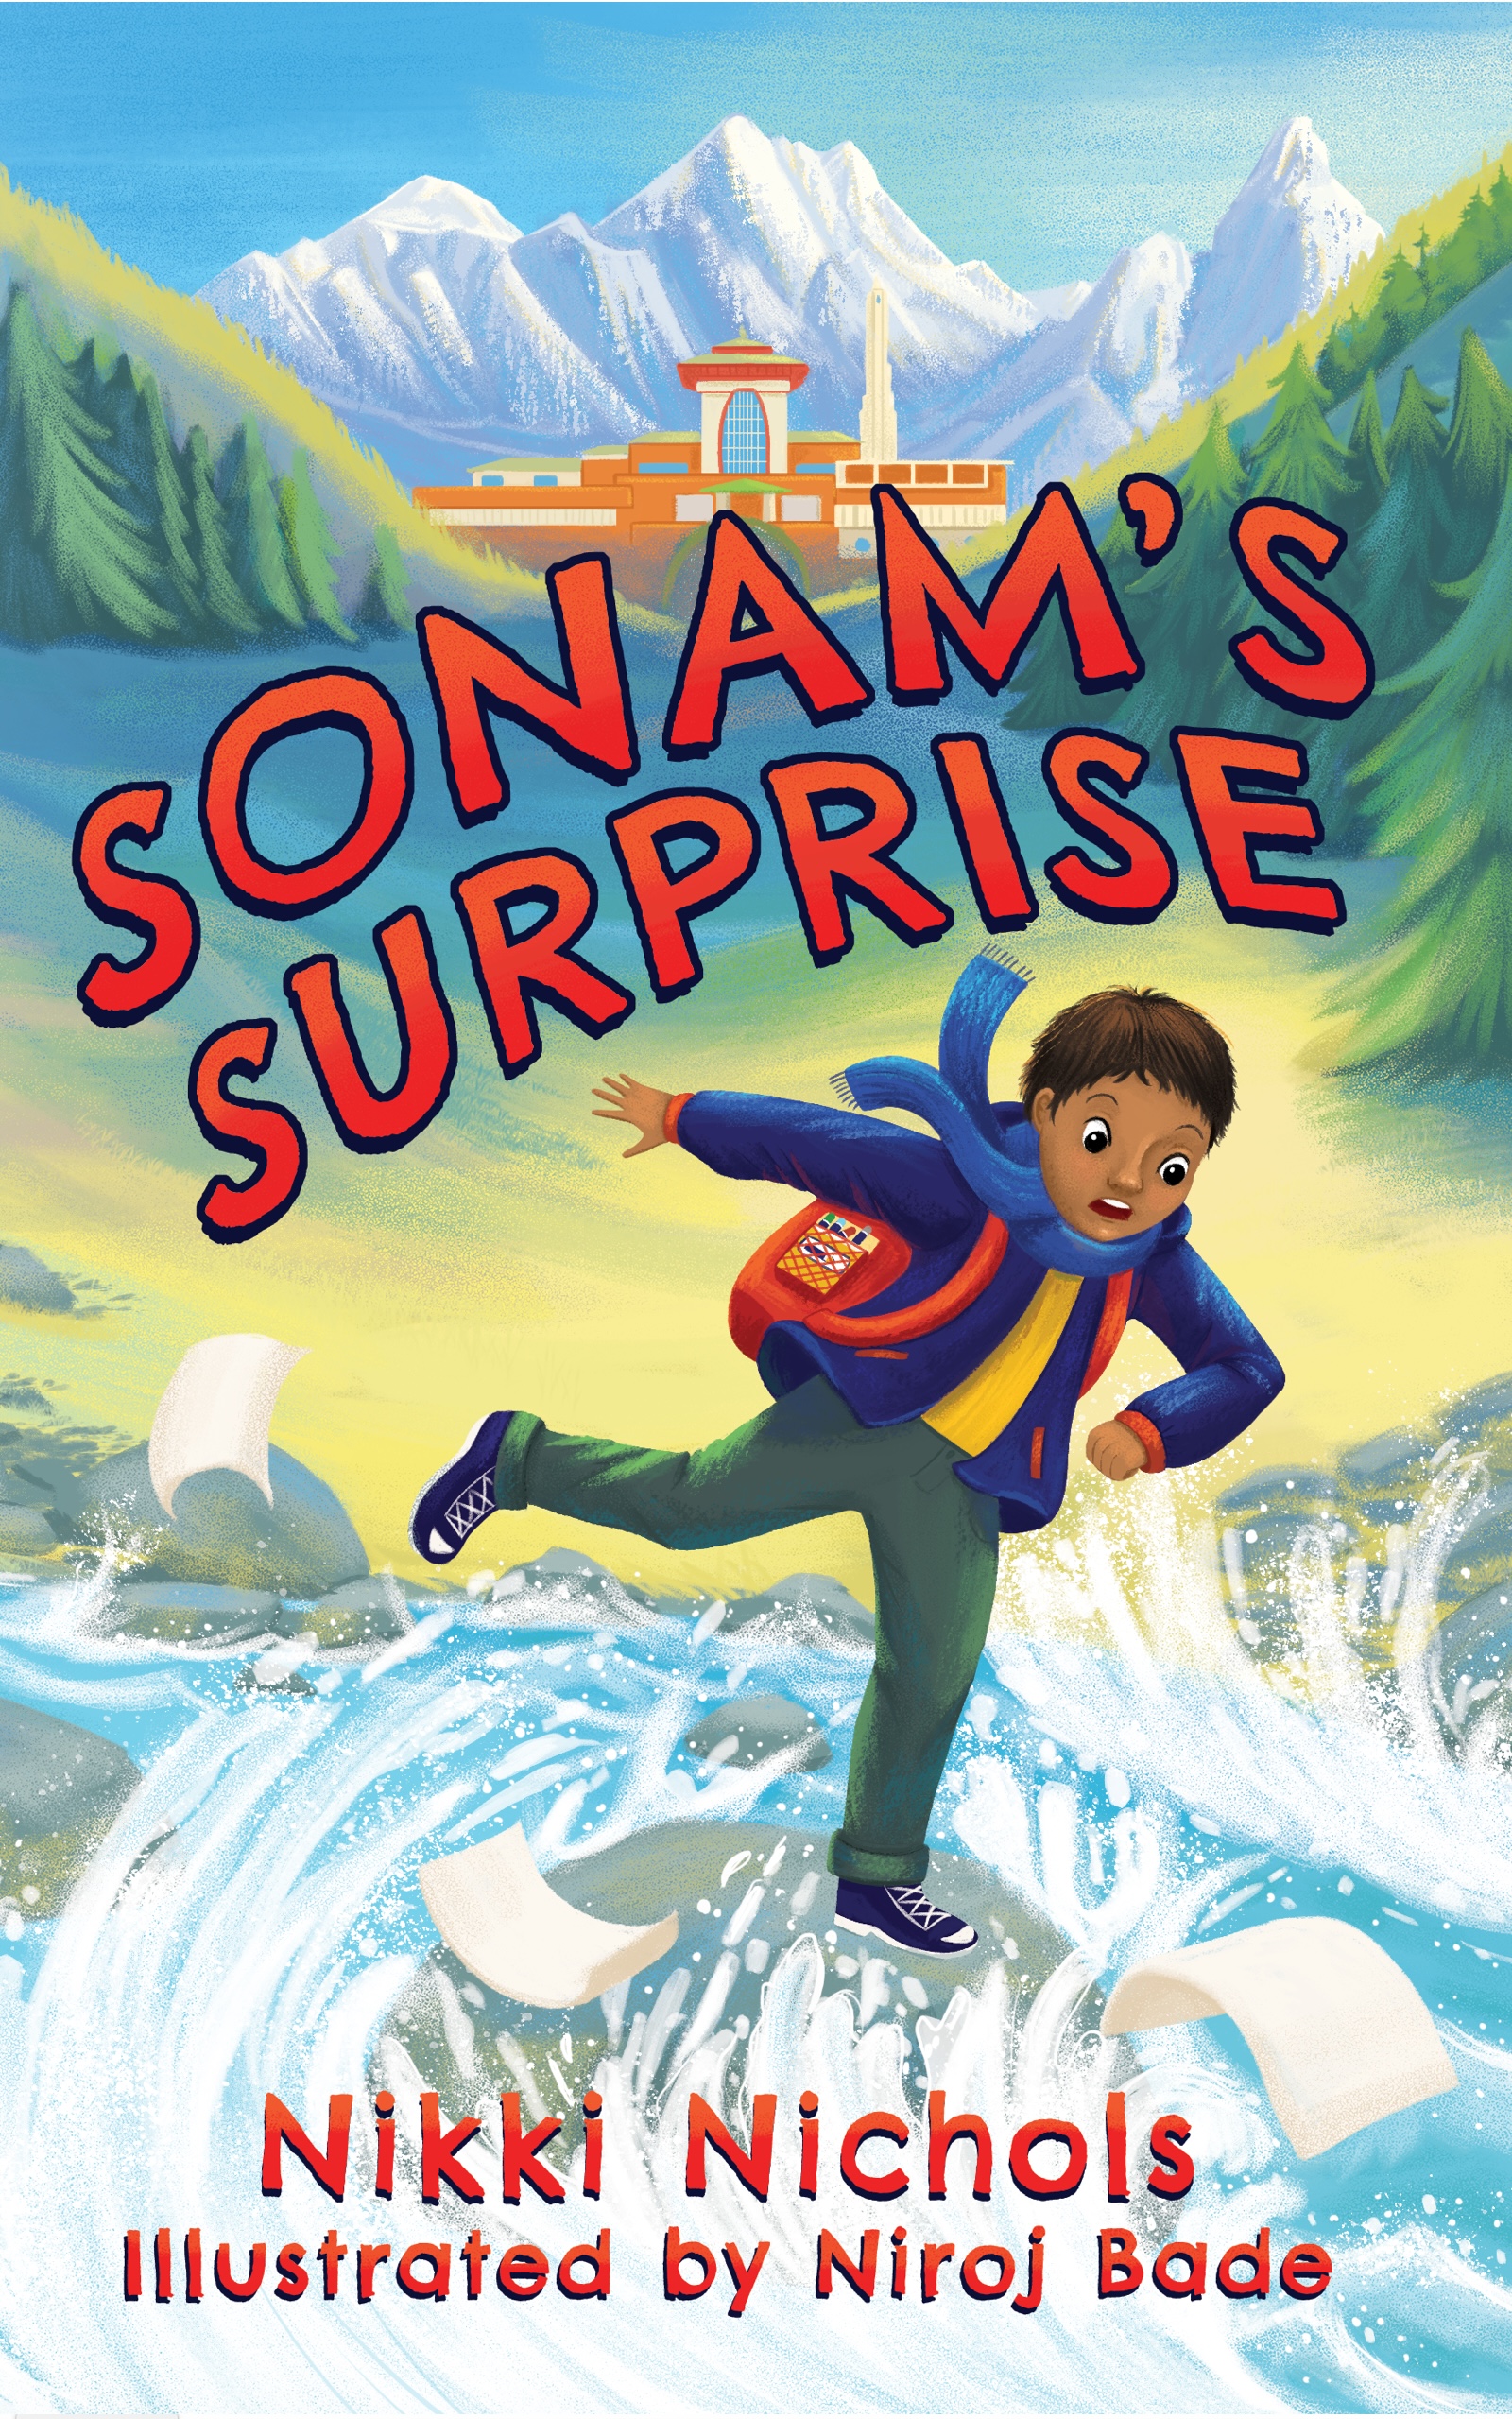 Sonam’s Surprise, Nikki Nichols; illustrated by Niroj Bade